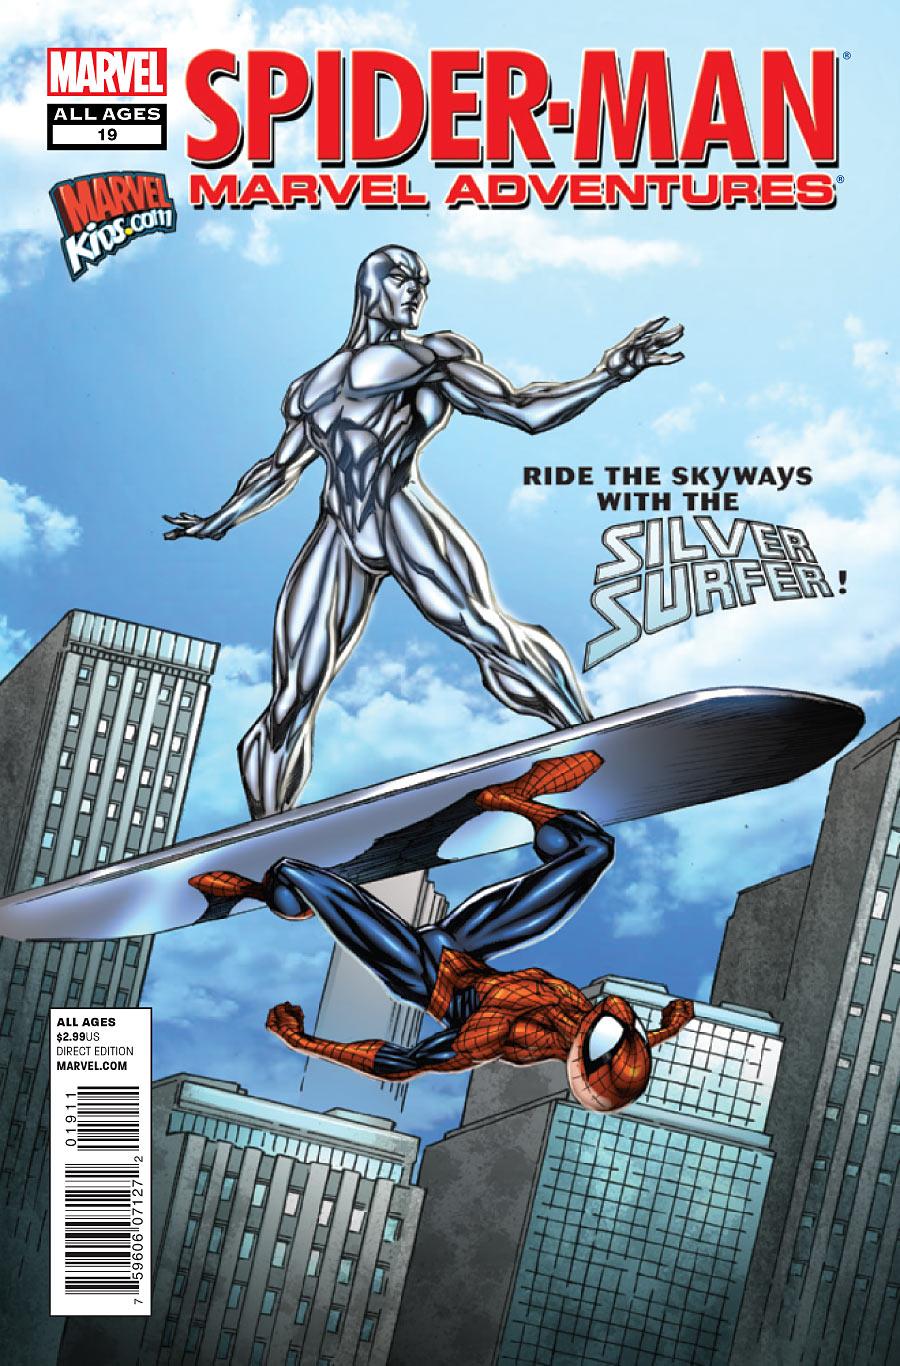 Marvel Adventures: Spider-Man Vol. 2 #19